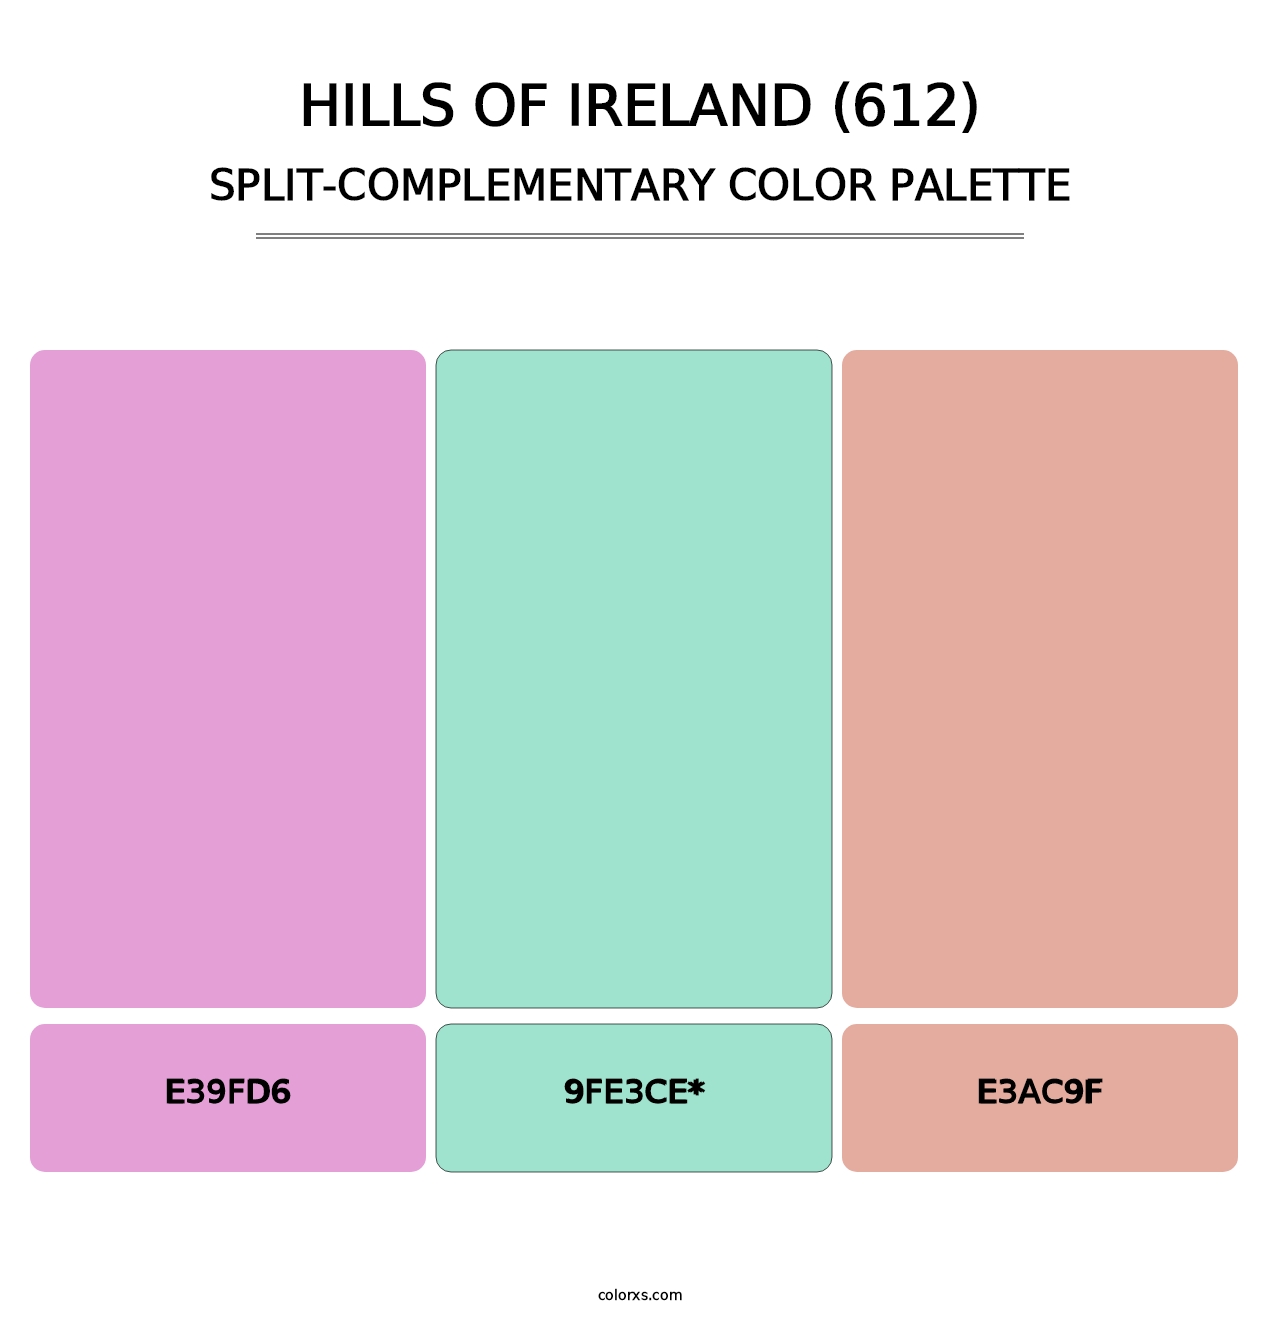 Hills of Ireland (612) - Split-Complementary Color Palette